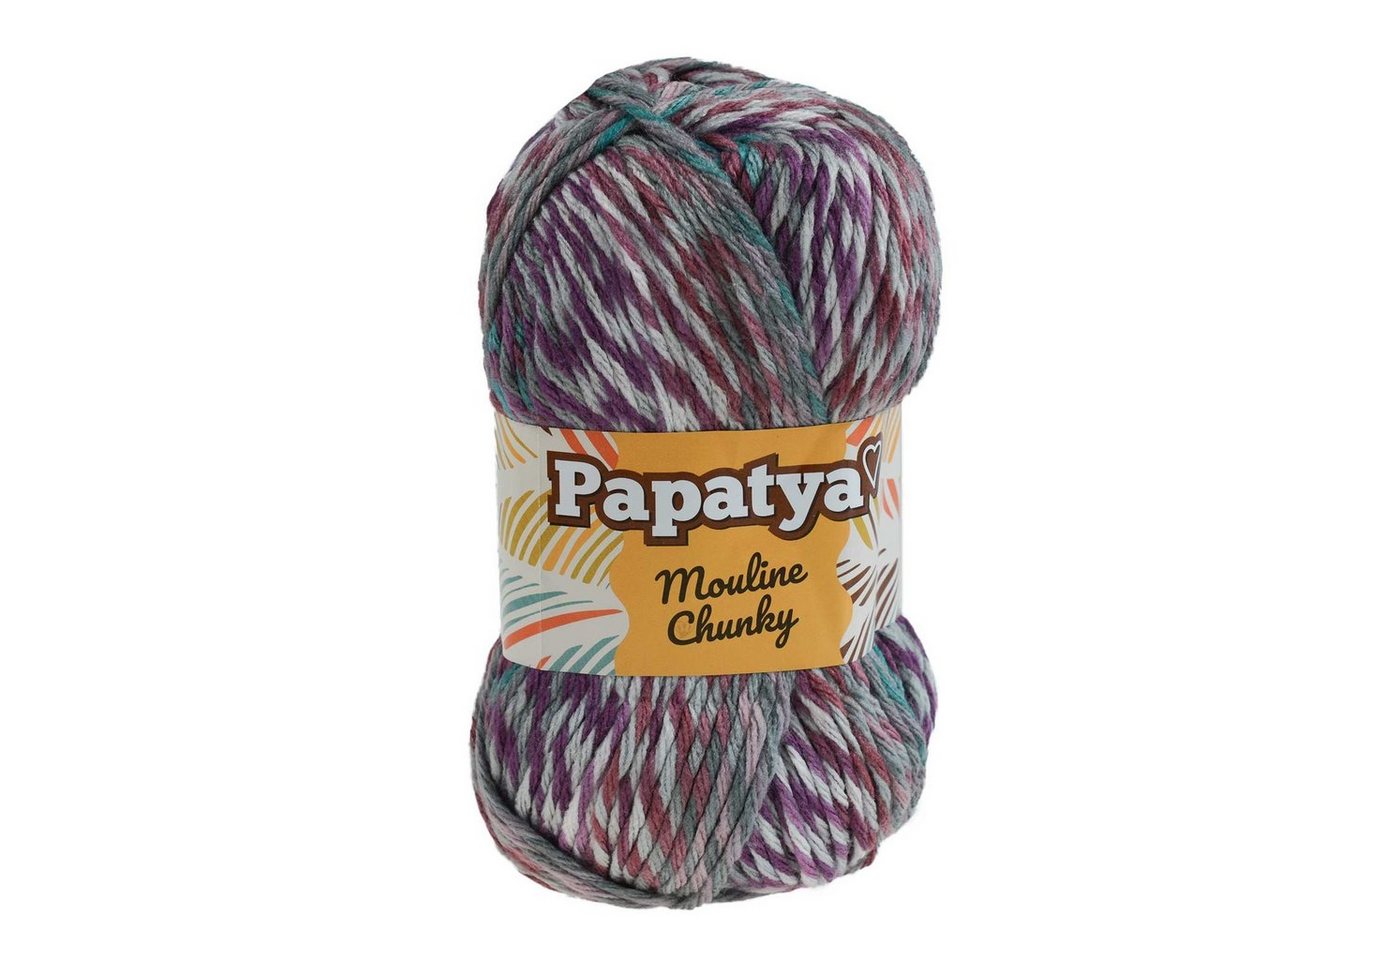 Papatya 100g Strickgarn Papatya Mouline Chunky Strickwolle mehrfarbig Effektgarn, 160 m, 6581 mehrfarbig von Papatya